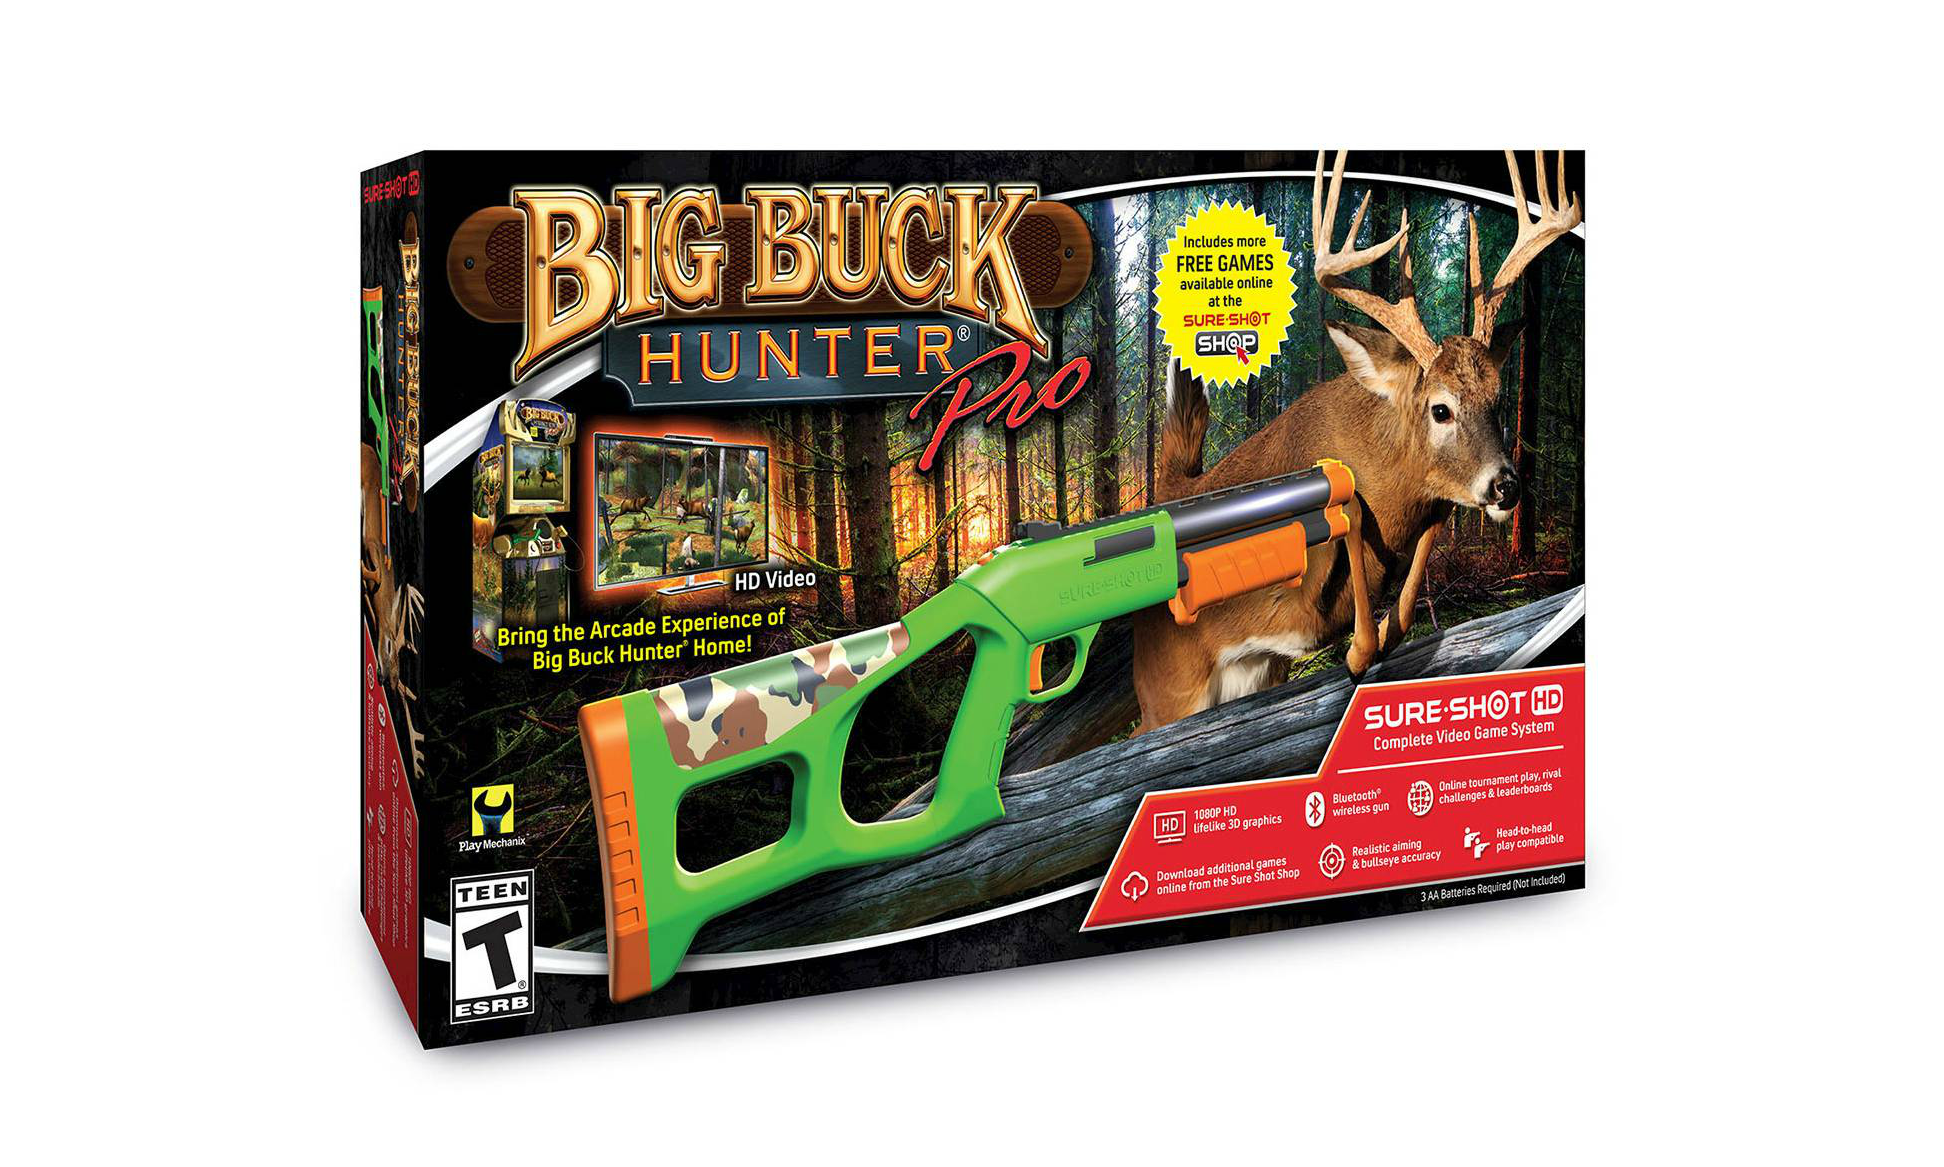 Sure Shot HD Big Buck Hunter Video Game Console